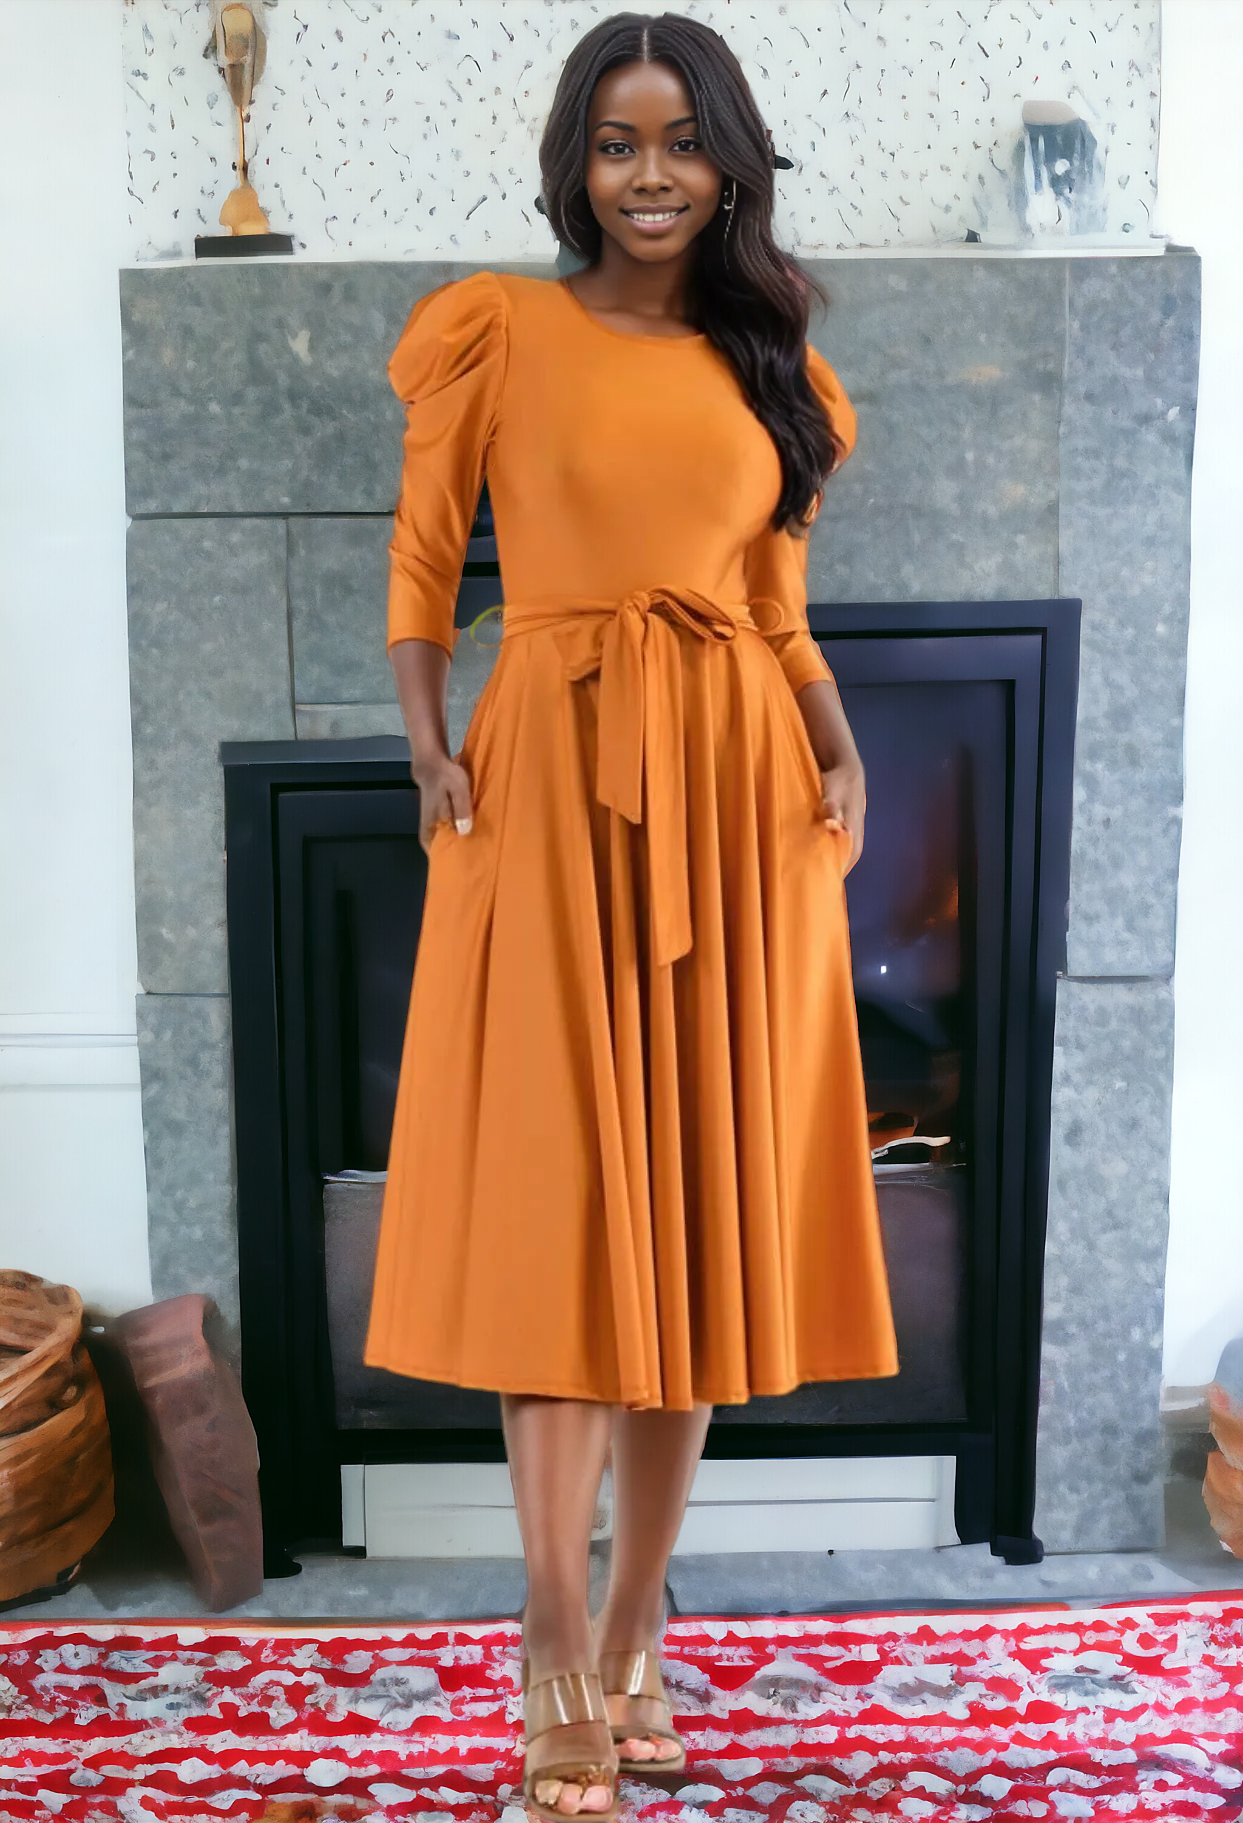 Puff Sleeve Cocktail Dress, Sizes 1X - 3X (Orange)